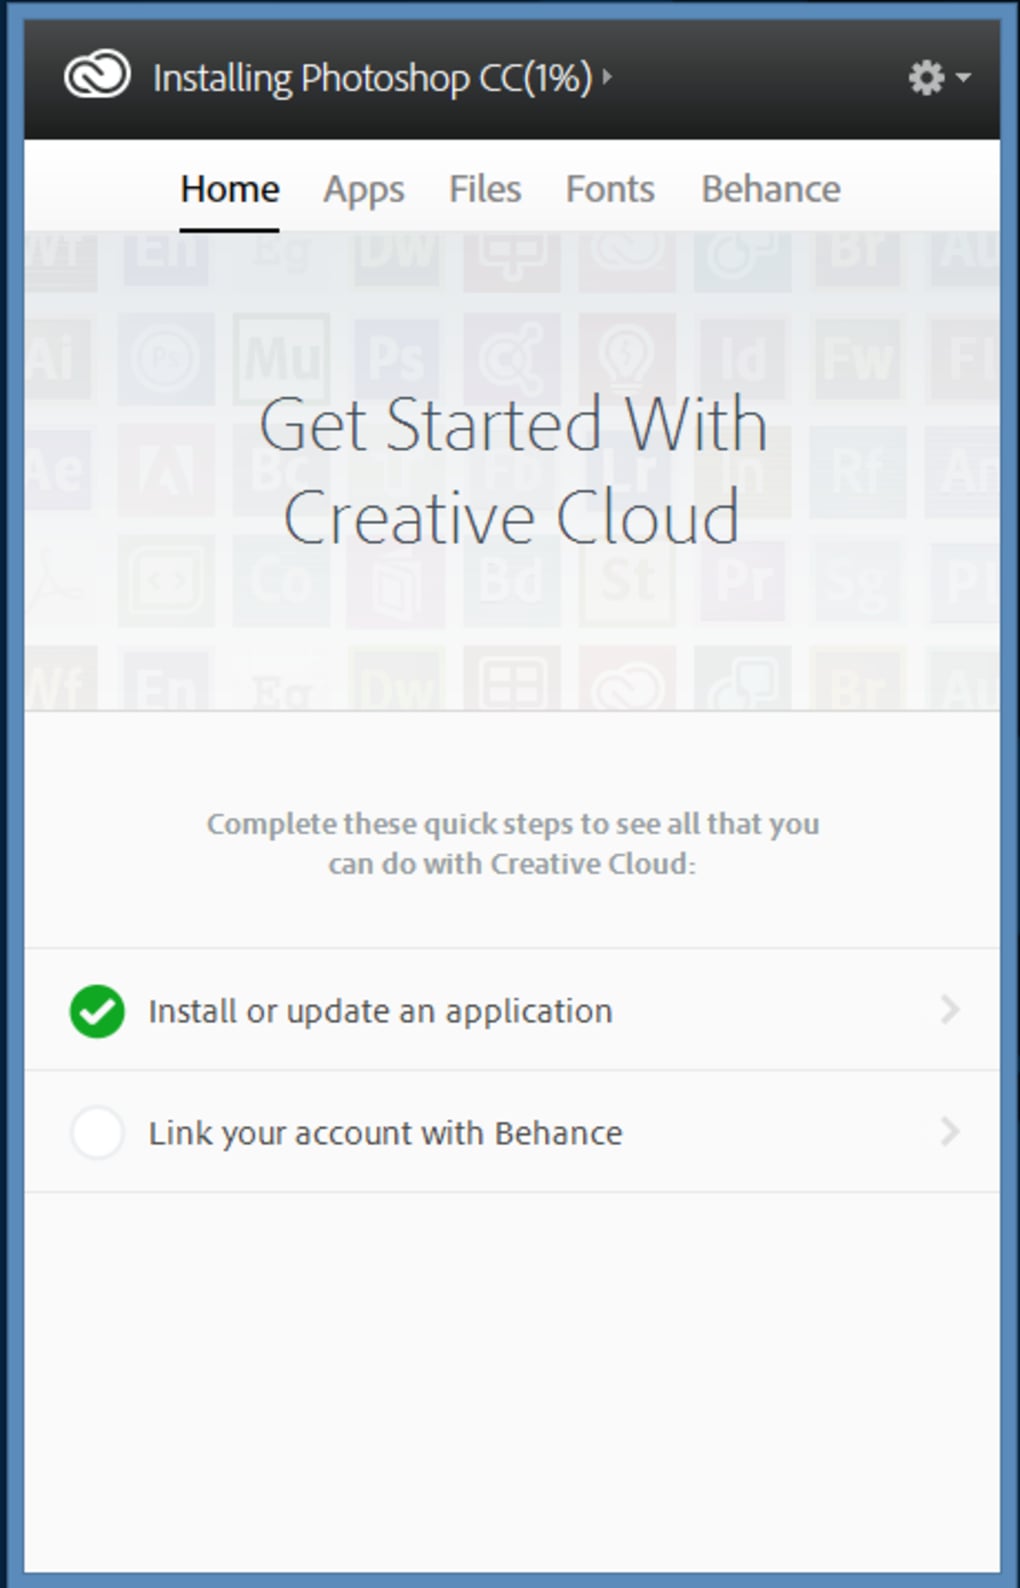 adobe creative cloud 2018 crack free download